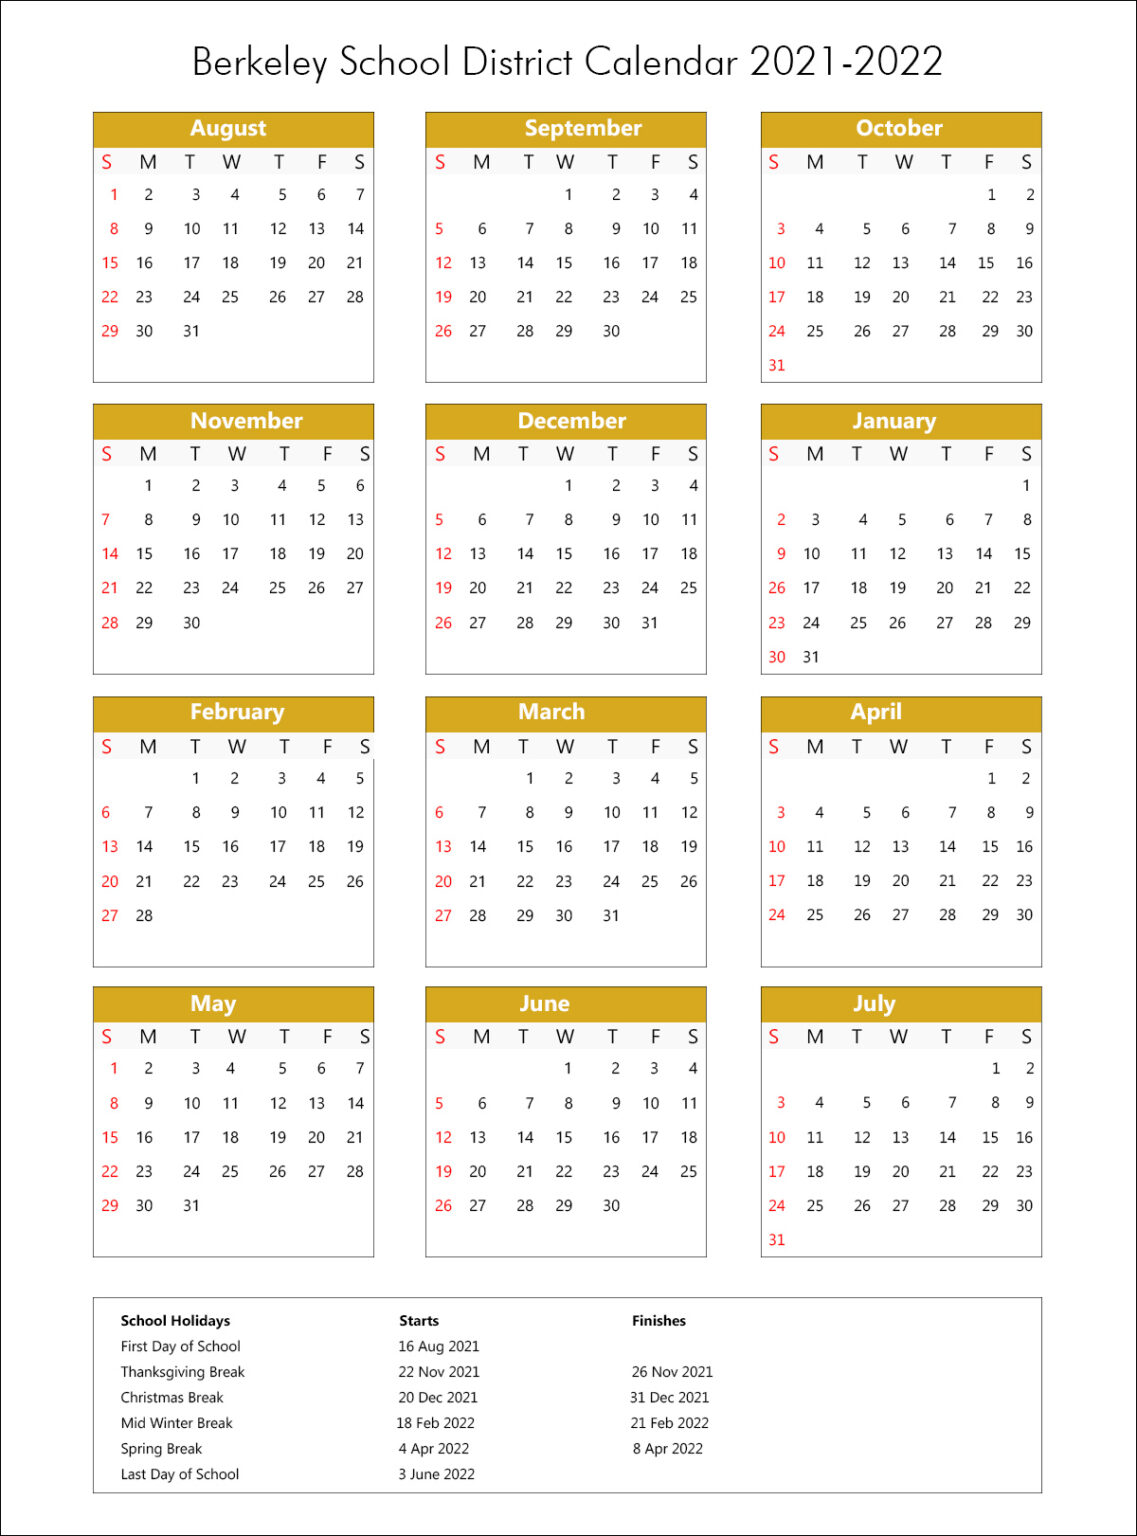 Berkeley Unified School District Calendar Holidays 2021-2022